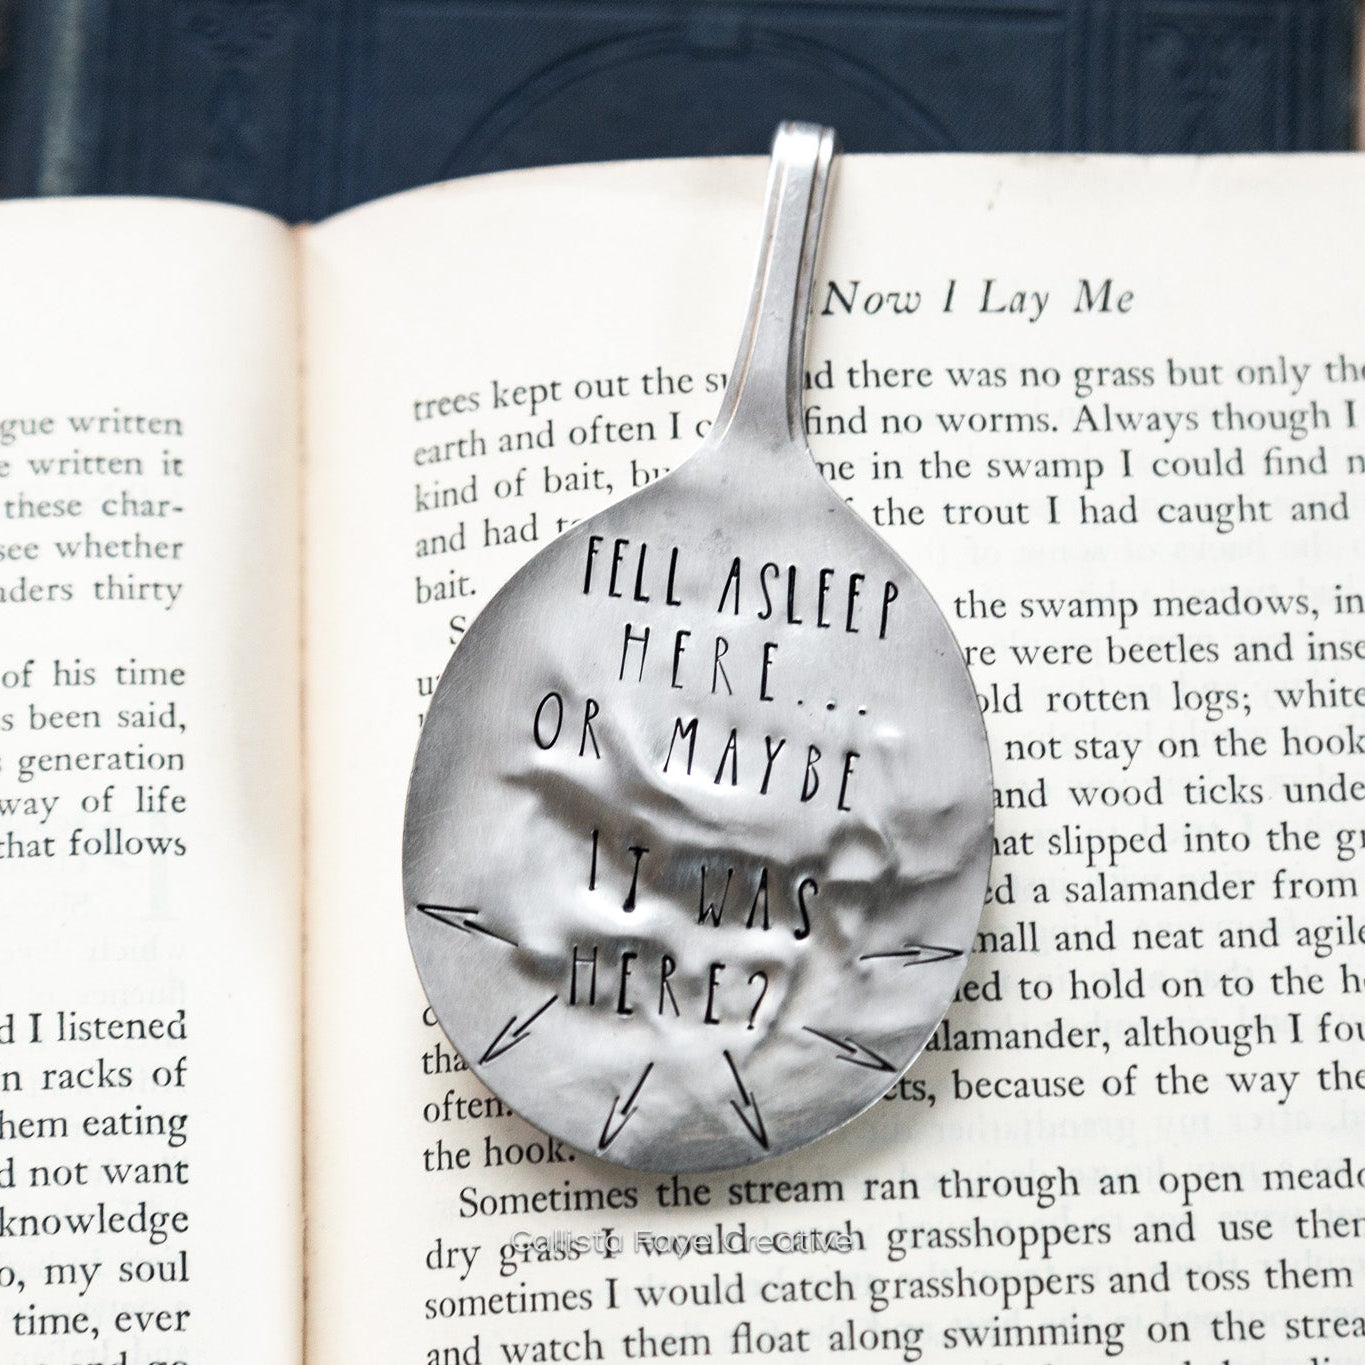 Fell Asleep Here... Or Maybe It Was Here, Vintage Spoon Bookmark Bookmarks callistafaye   